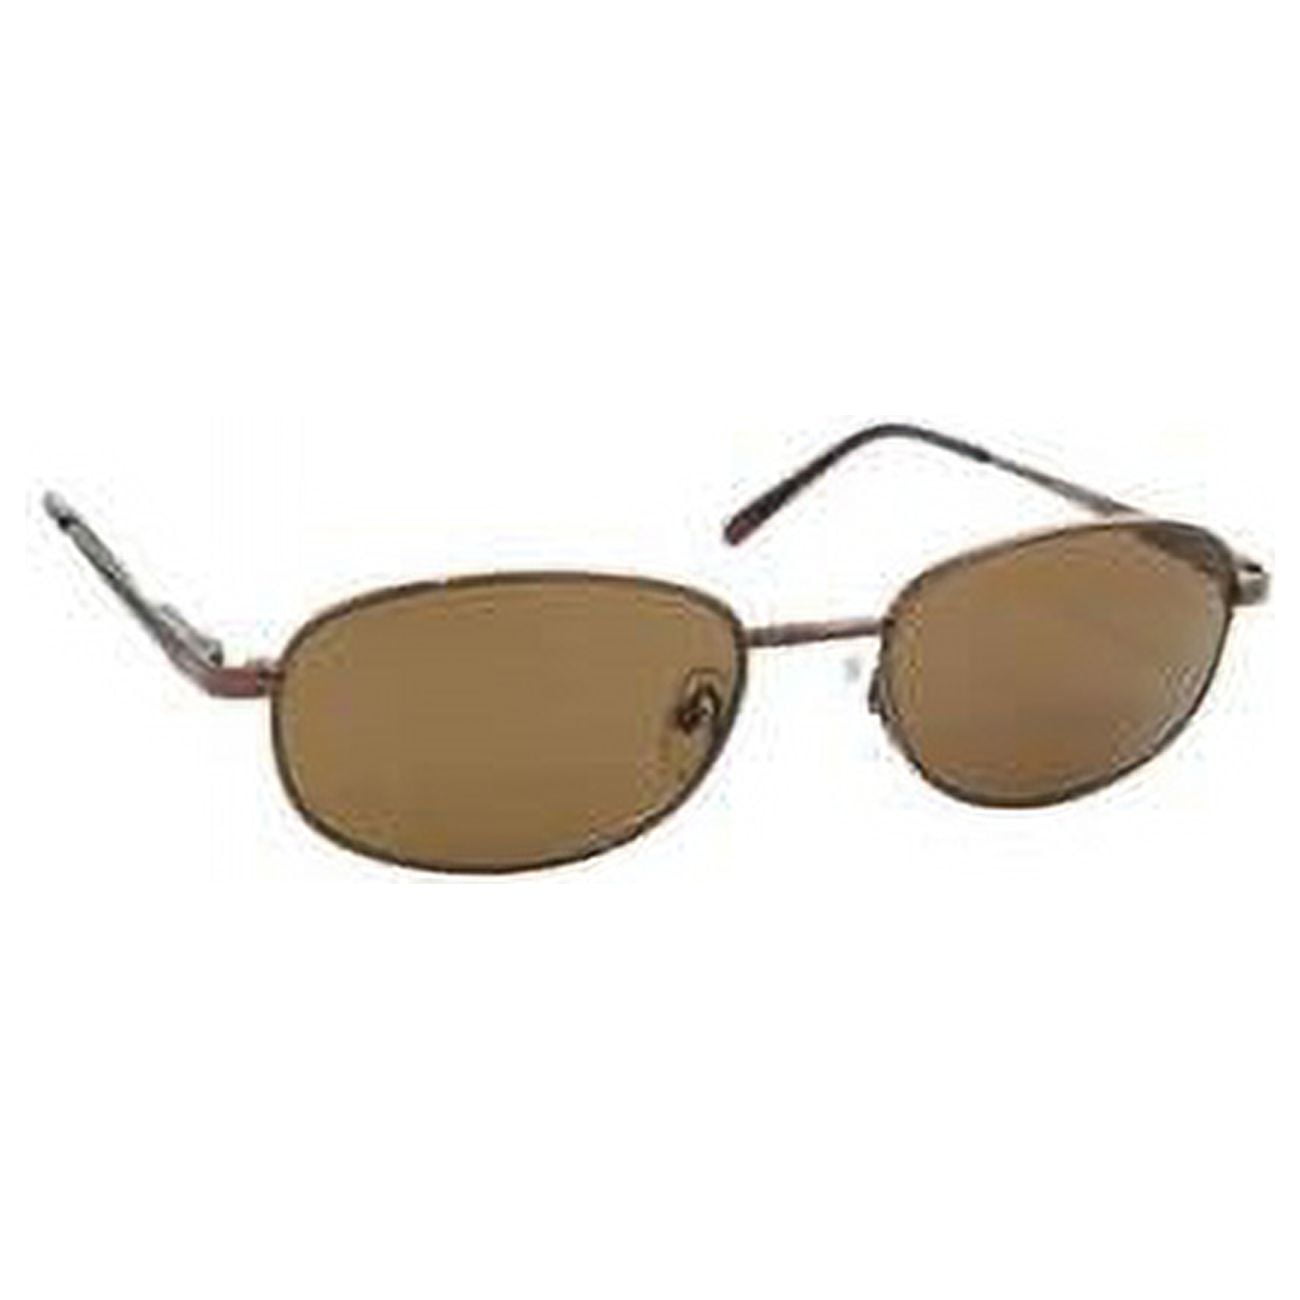 Coppermax 3711GPP BRN/AMBER Logan Polarized Sunglasses - Shiny Brown ...